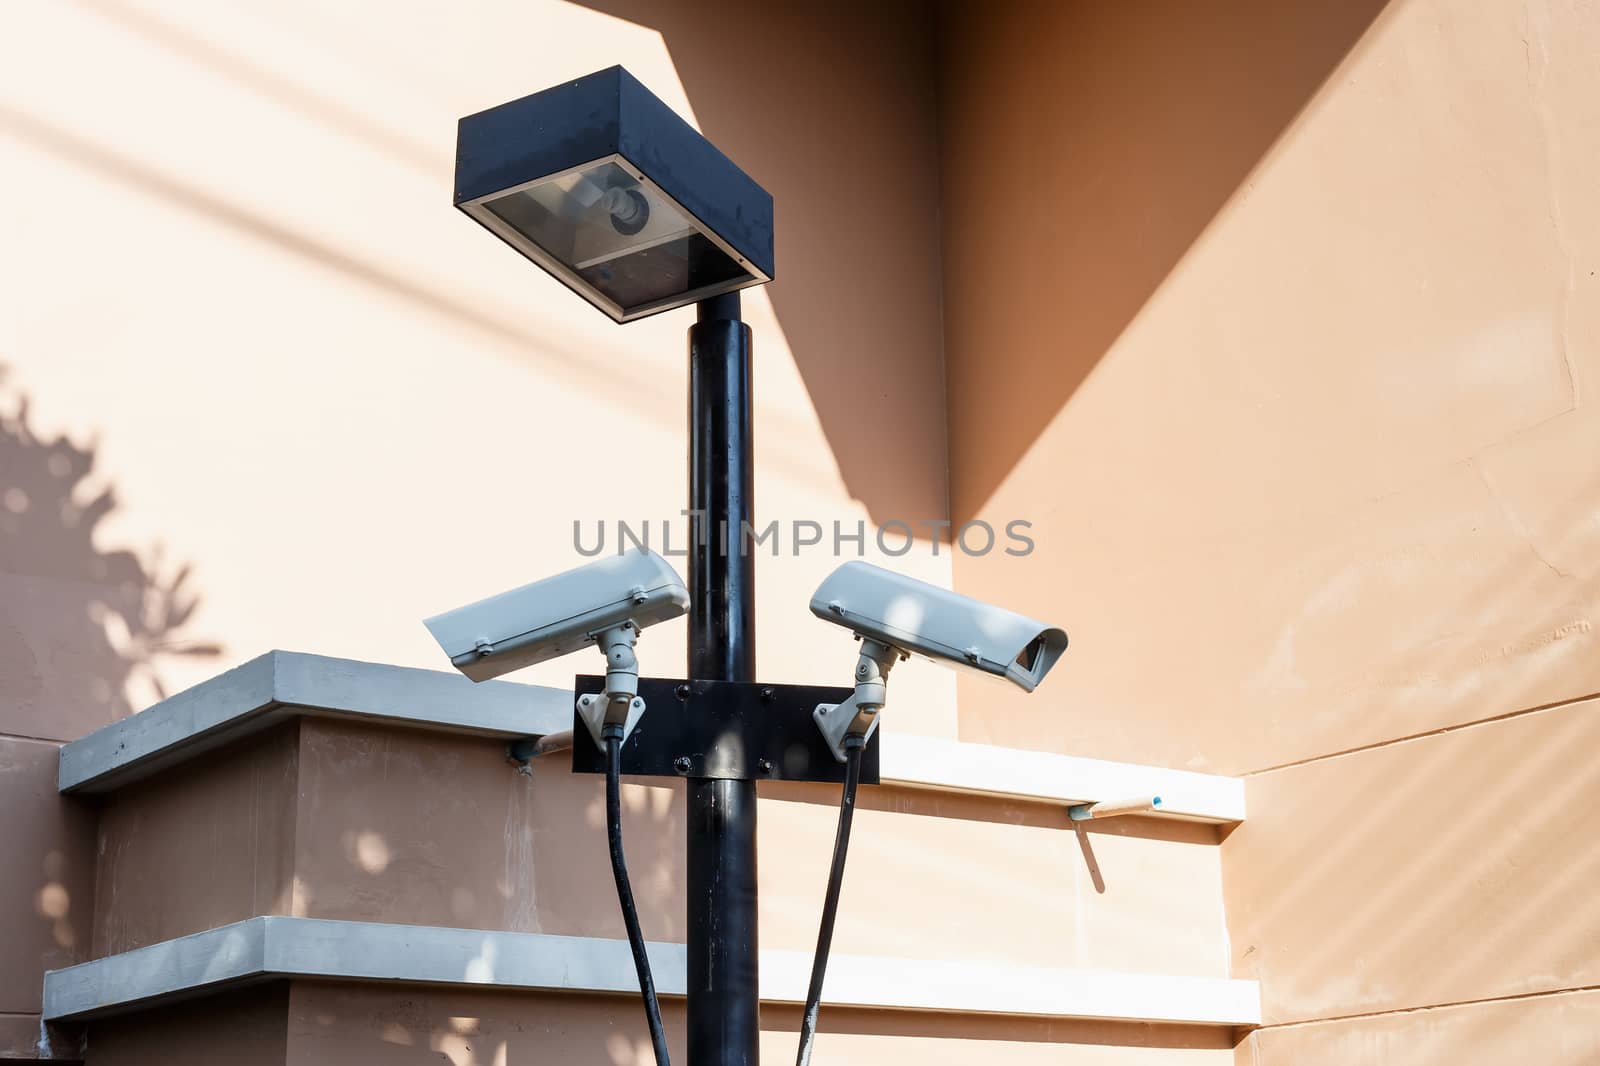 Two urban security cameras